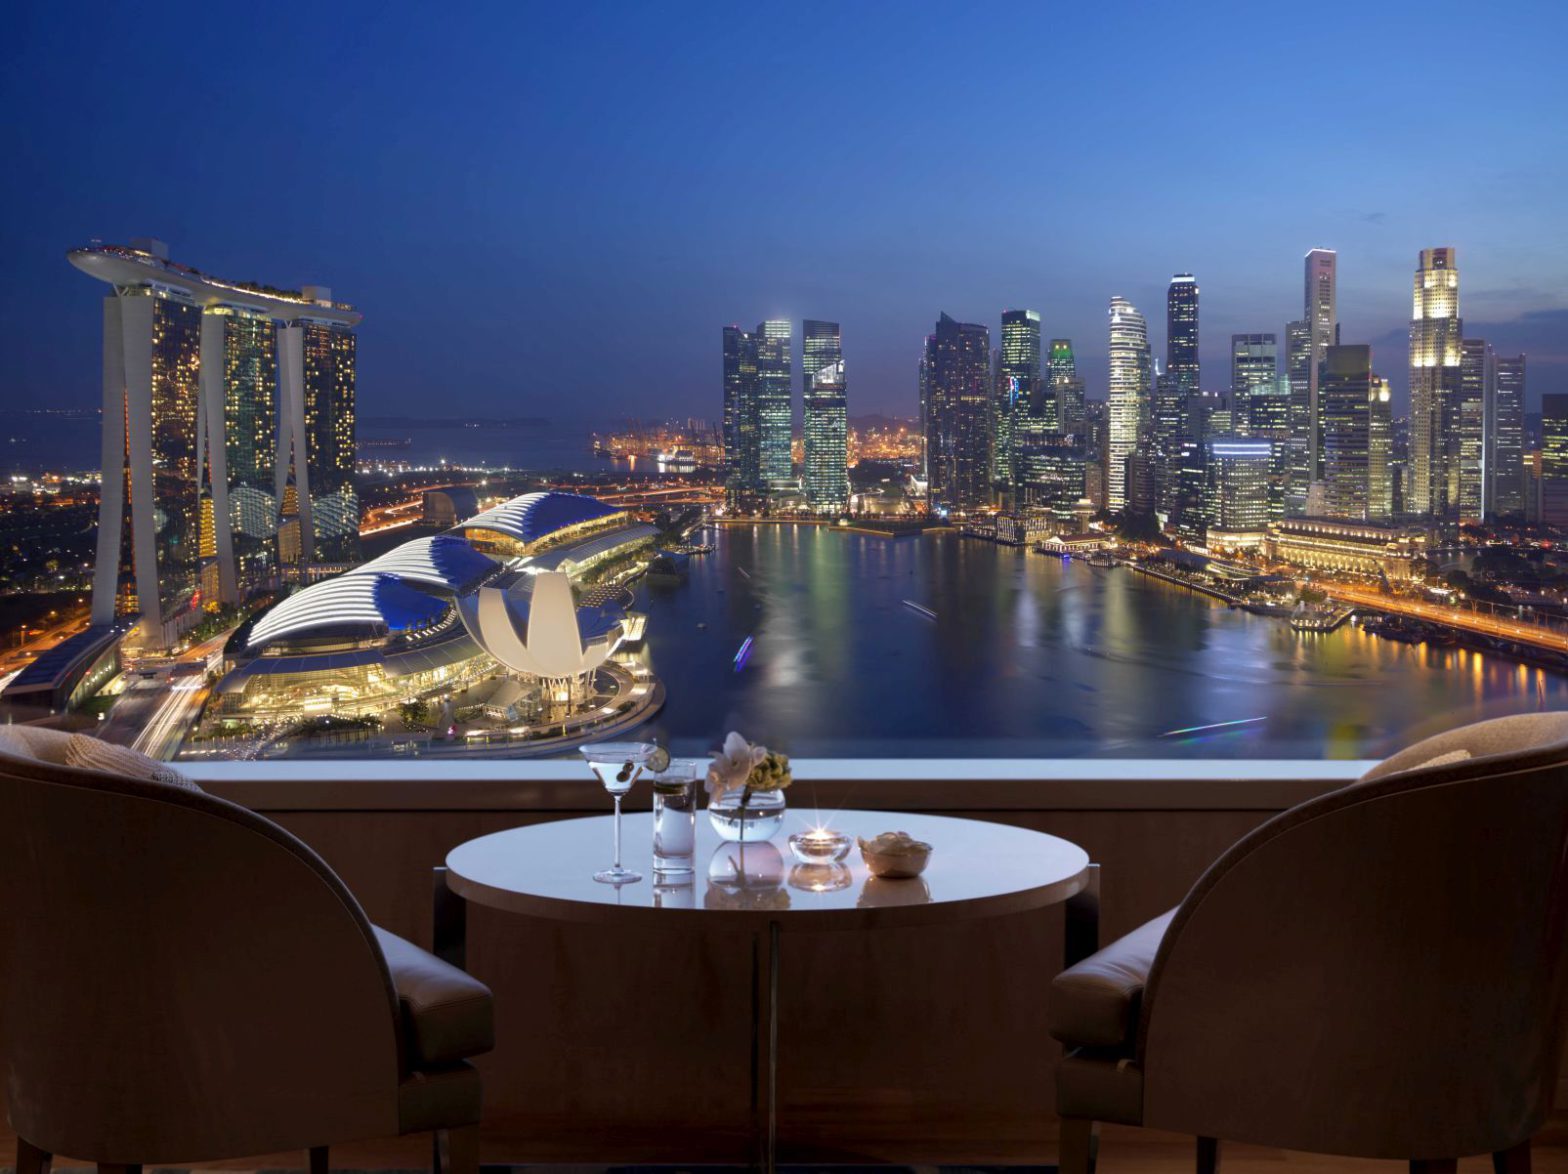 Club-Lounge-View at the RitzCarlton Millennia Singapore